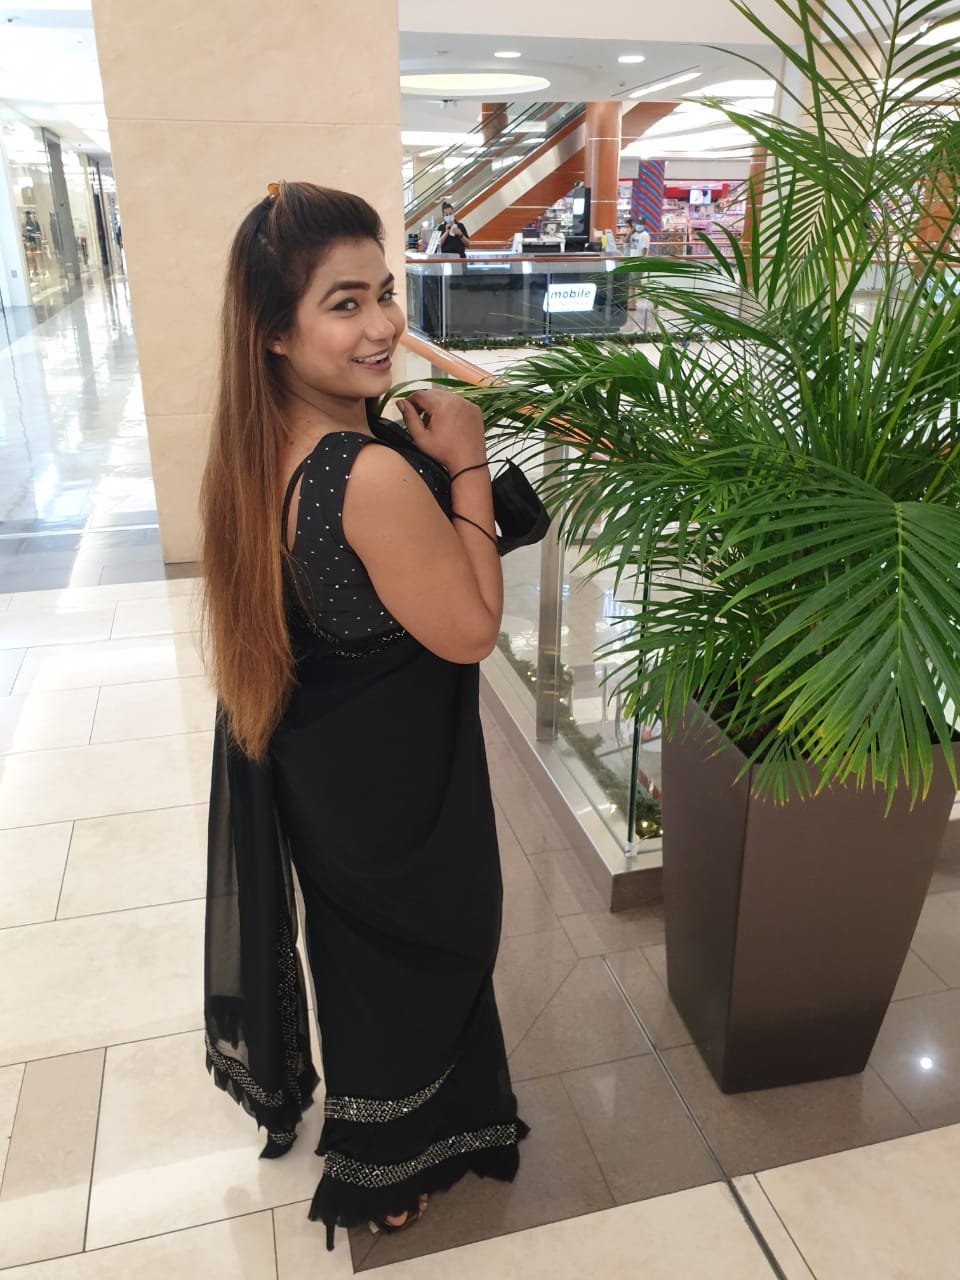 Sanjana Indian Housewife, Indian escort in Dubai pic image